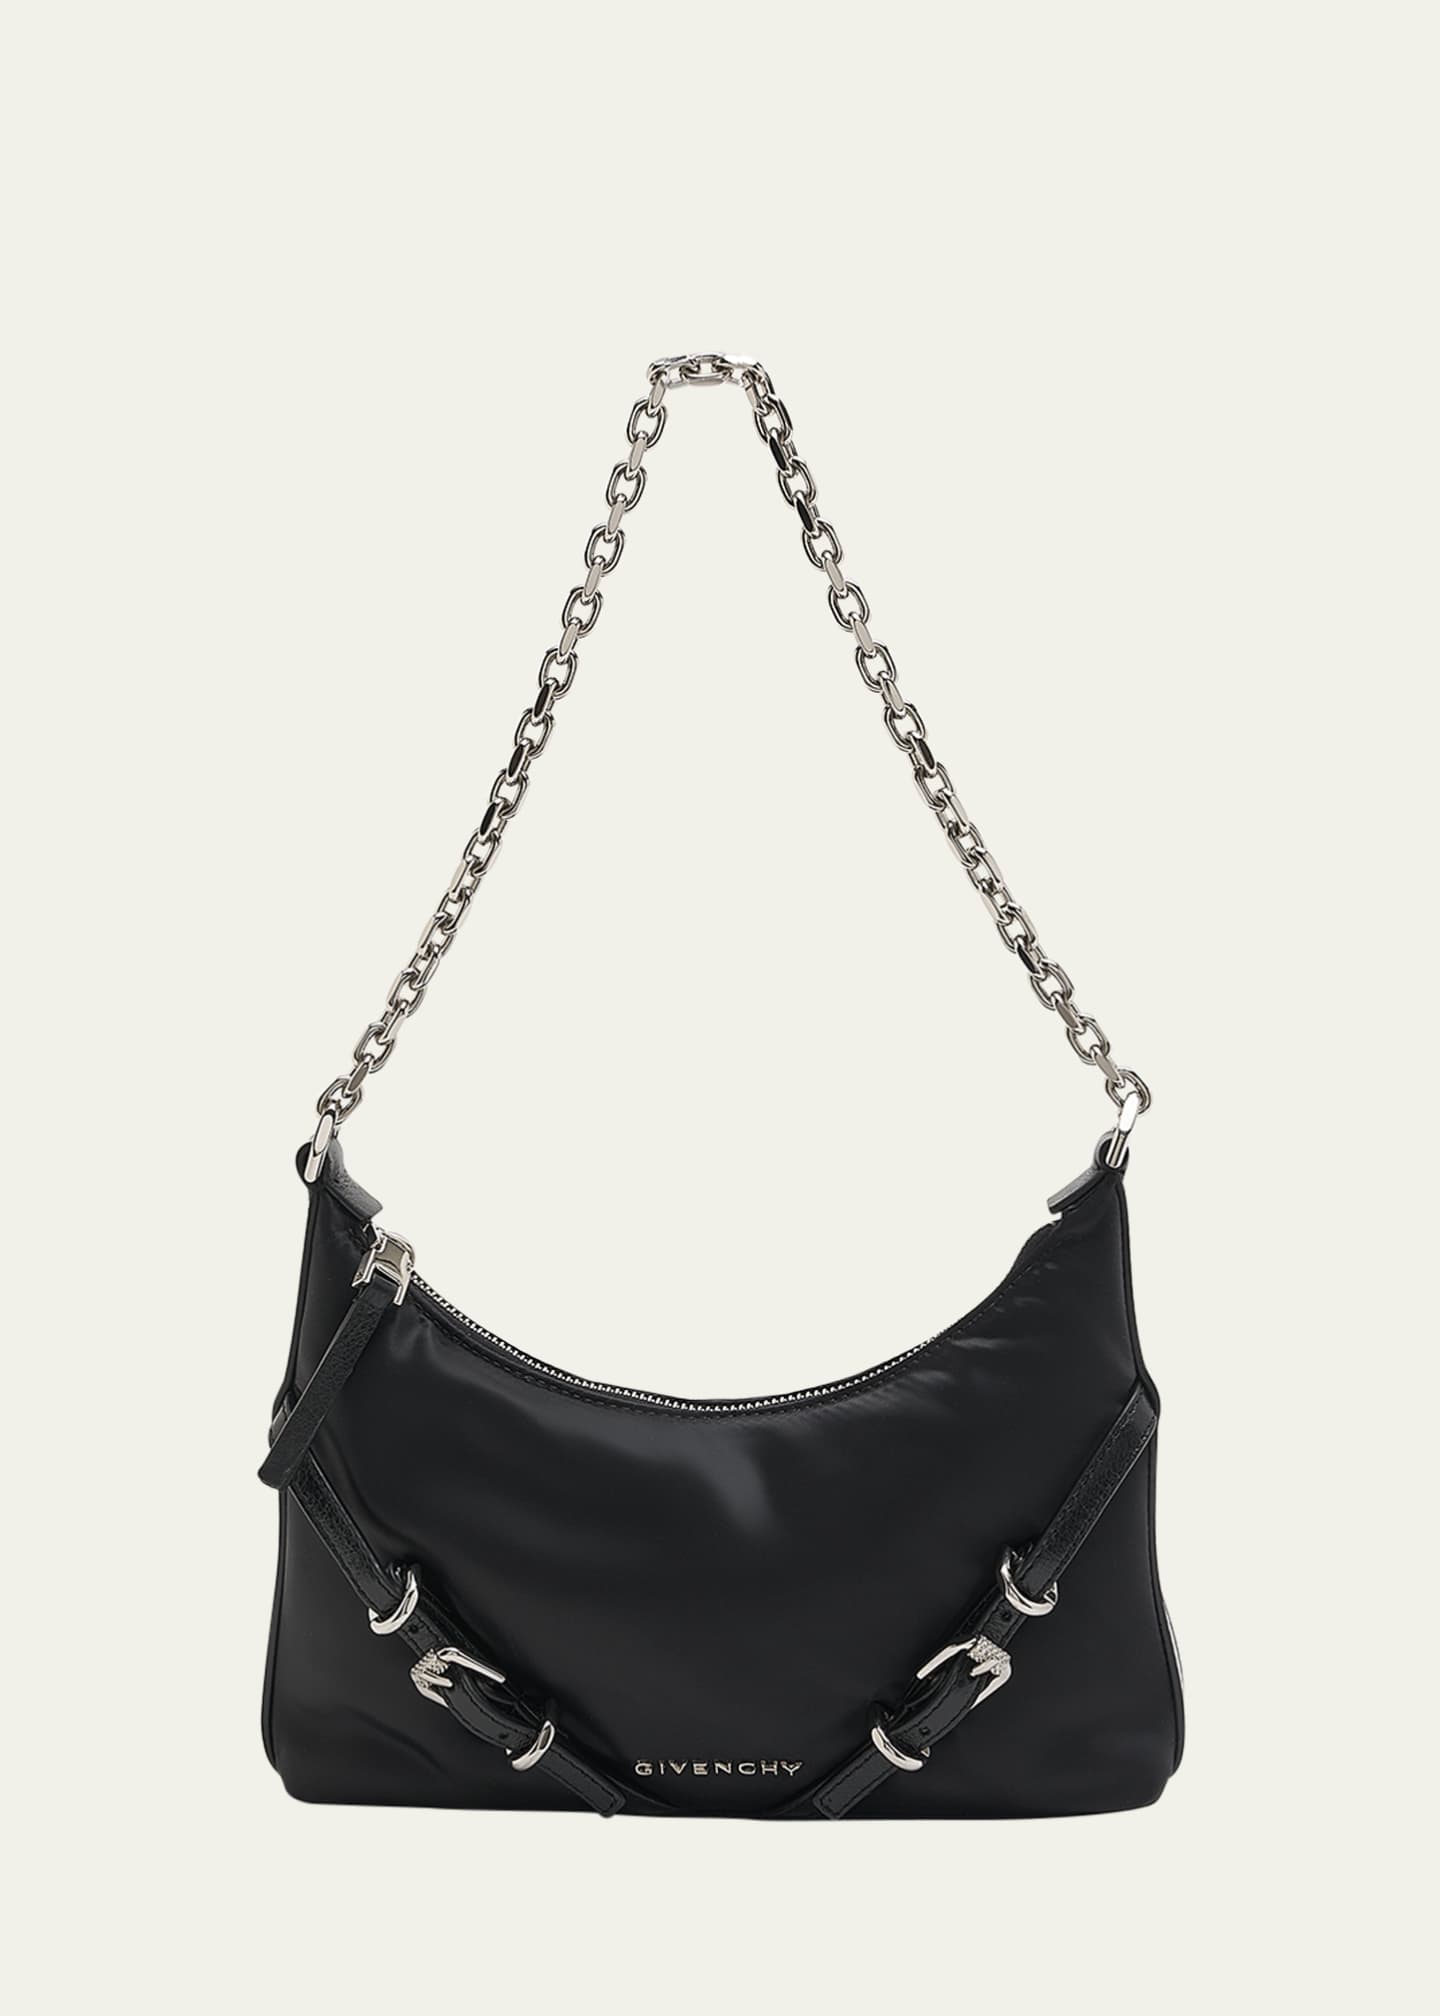 Givenchy Voyou Party Shoulder Bag in Nylon - Bergdorf Goodman